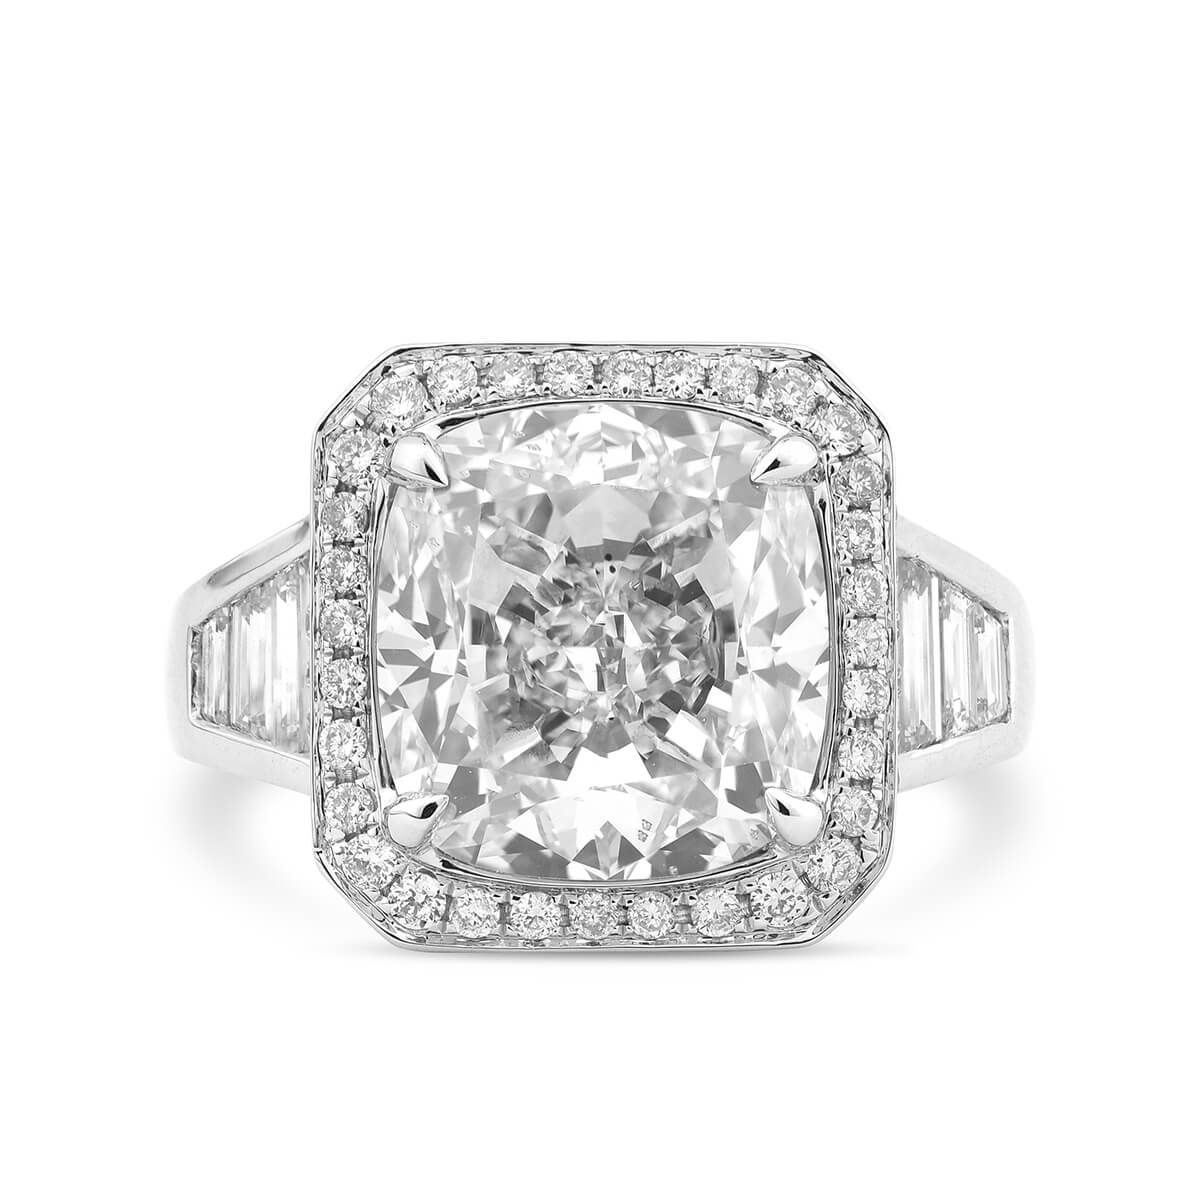  White Diamond Ring, 7.02 Ct. (8.46 Ct. TW), Cushion shape, GIA Certified, 5182970126